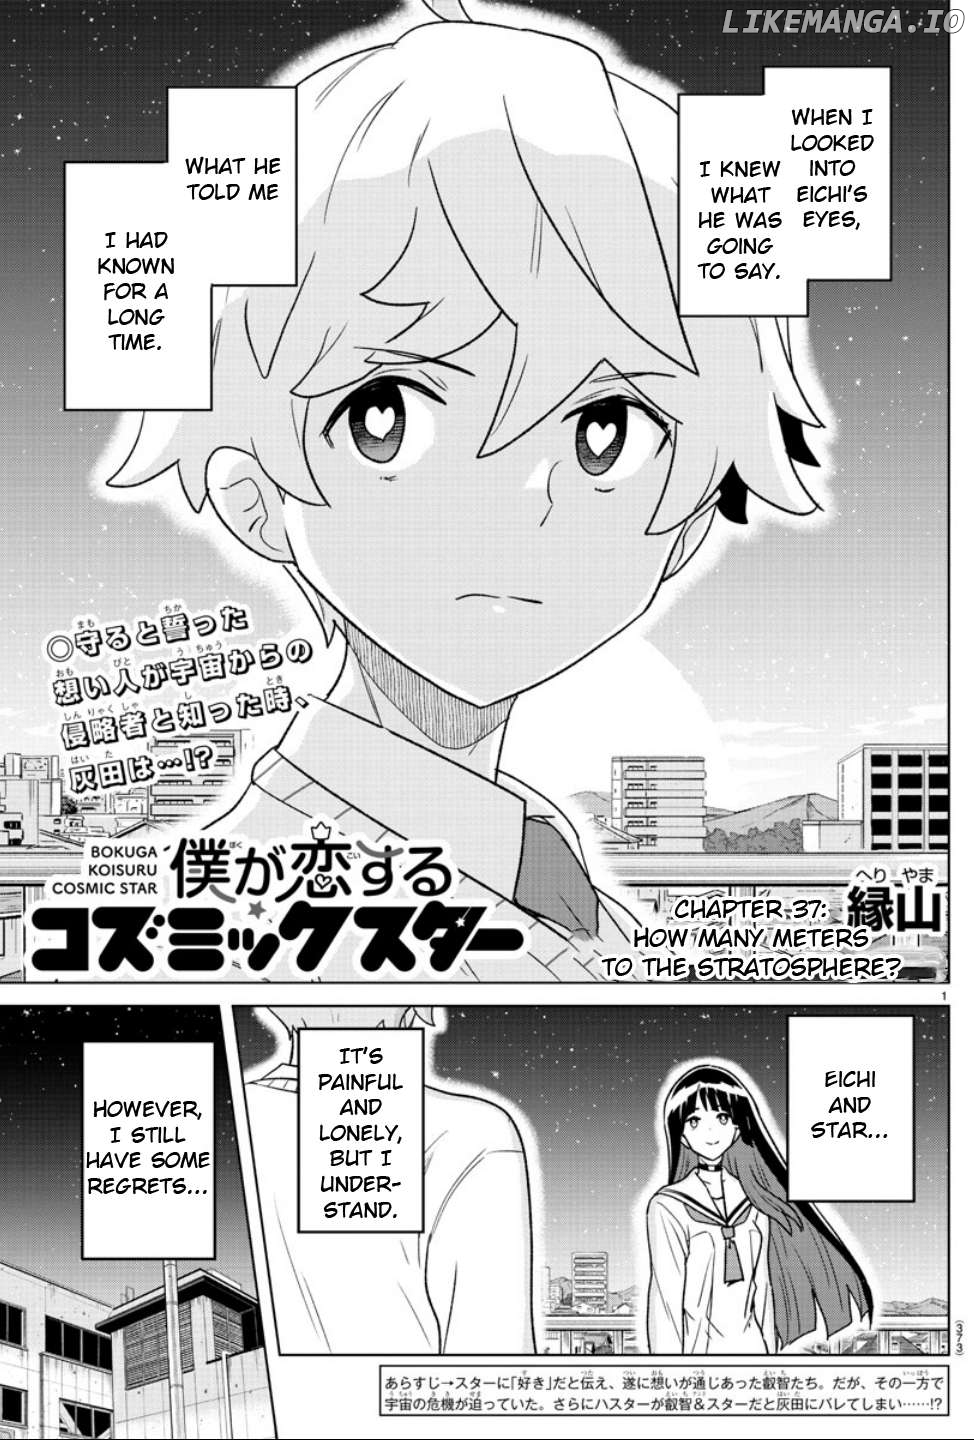 Boku Ga Koisuru Cosmic Star Chapter 37 - page 1